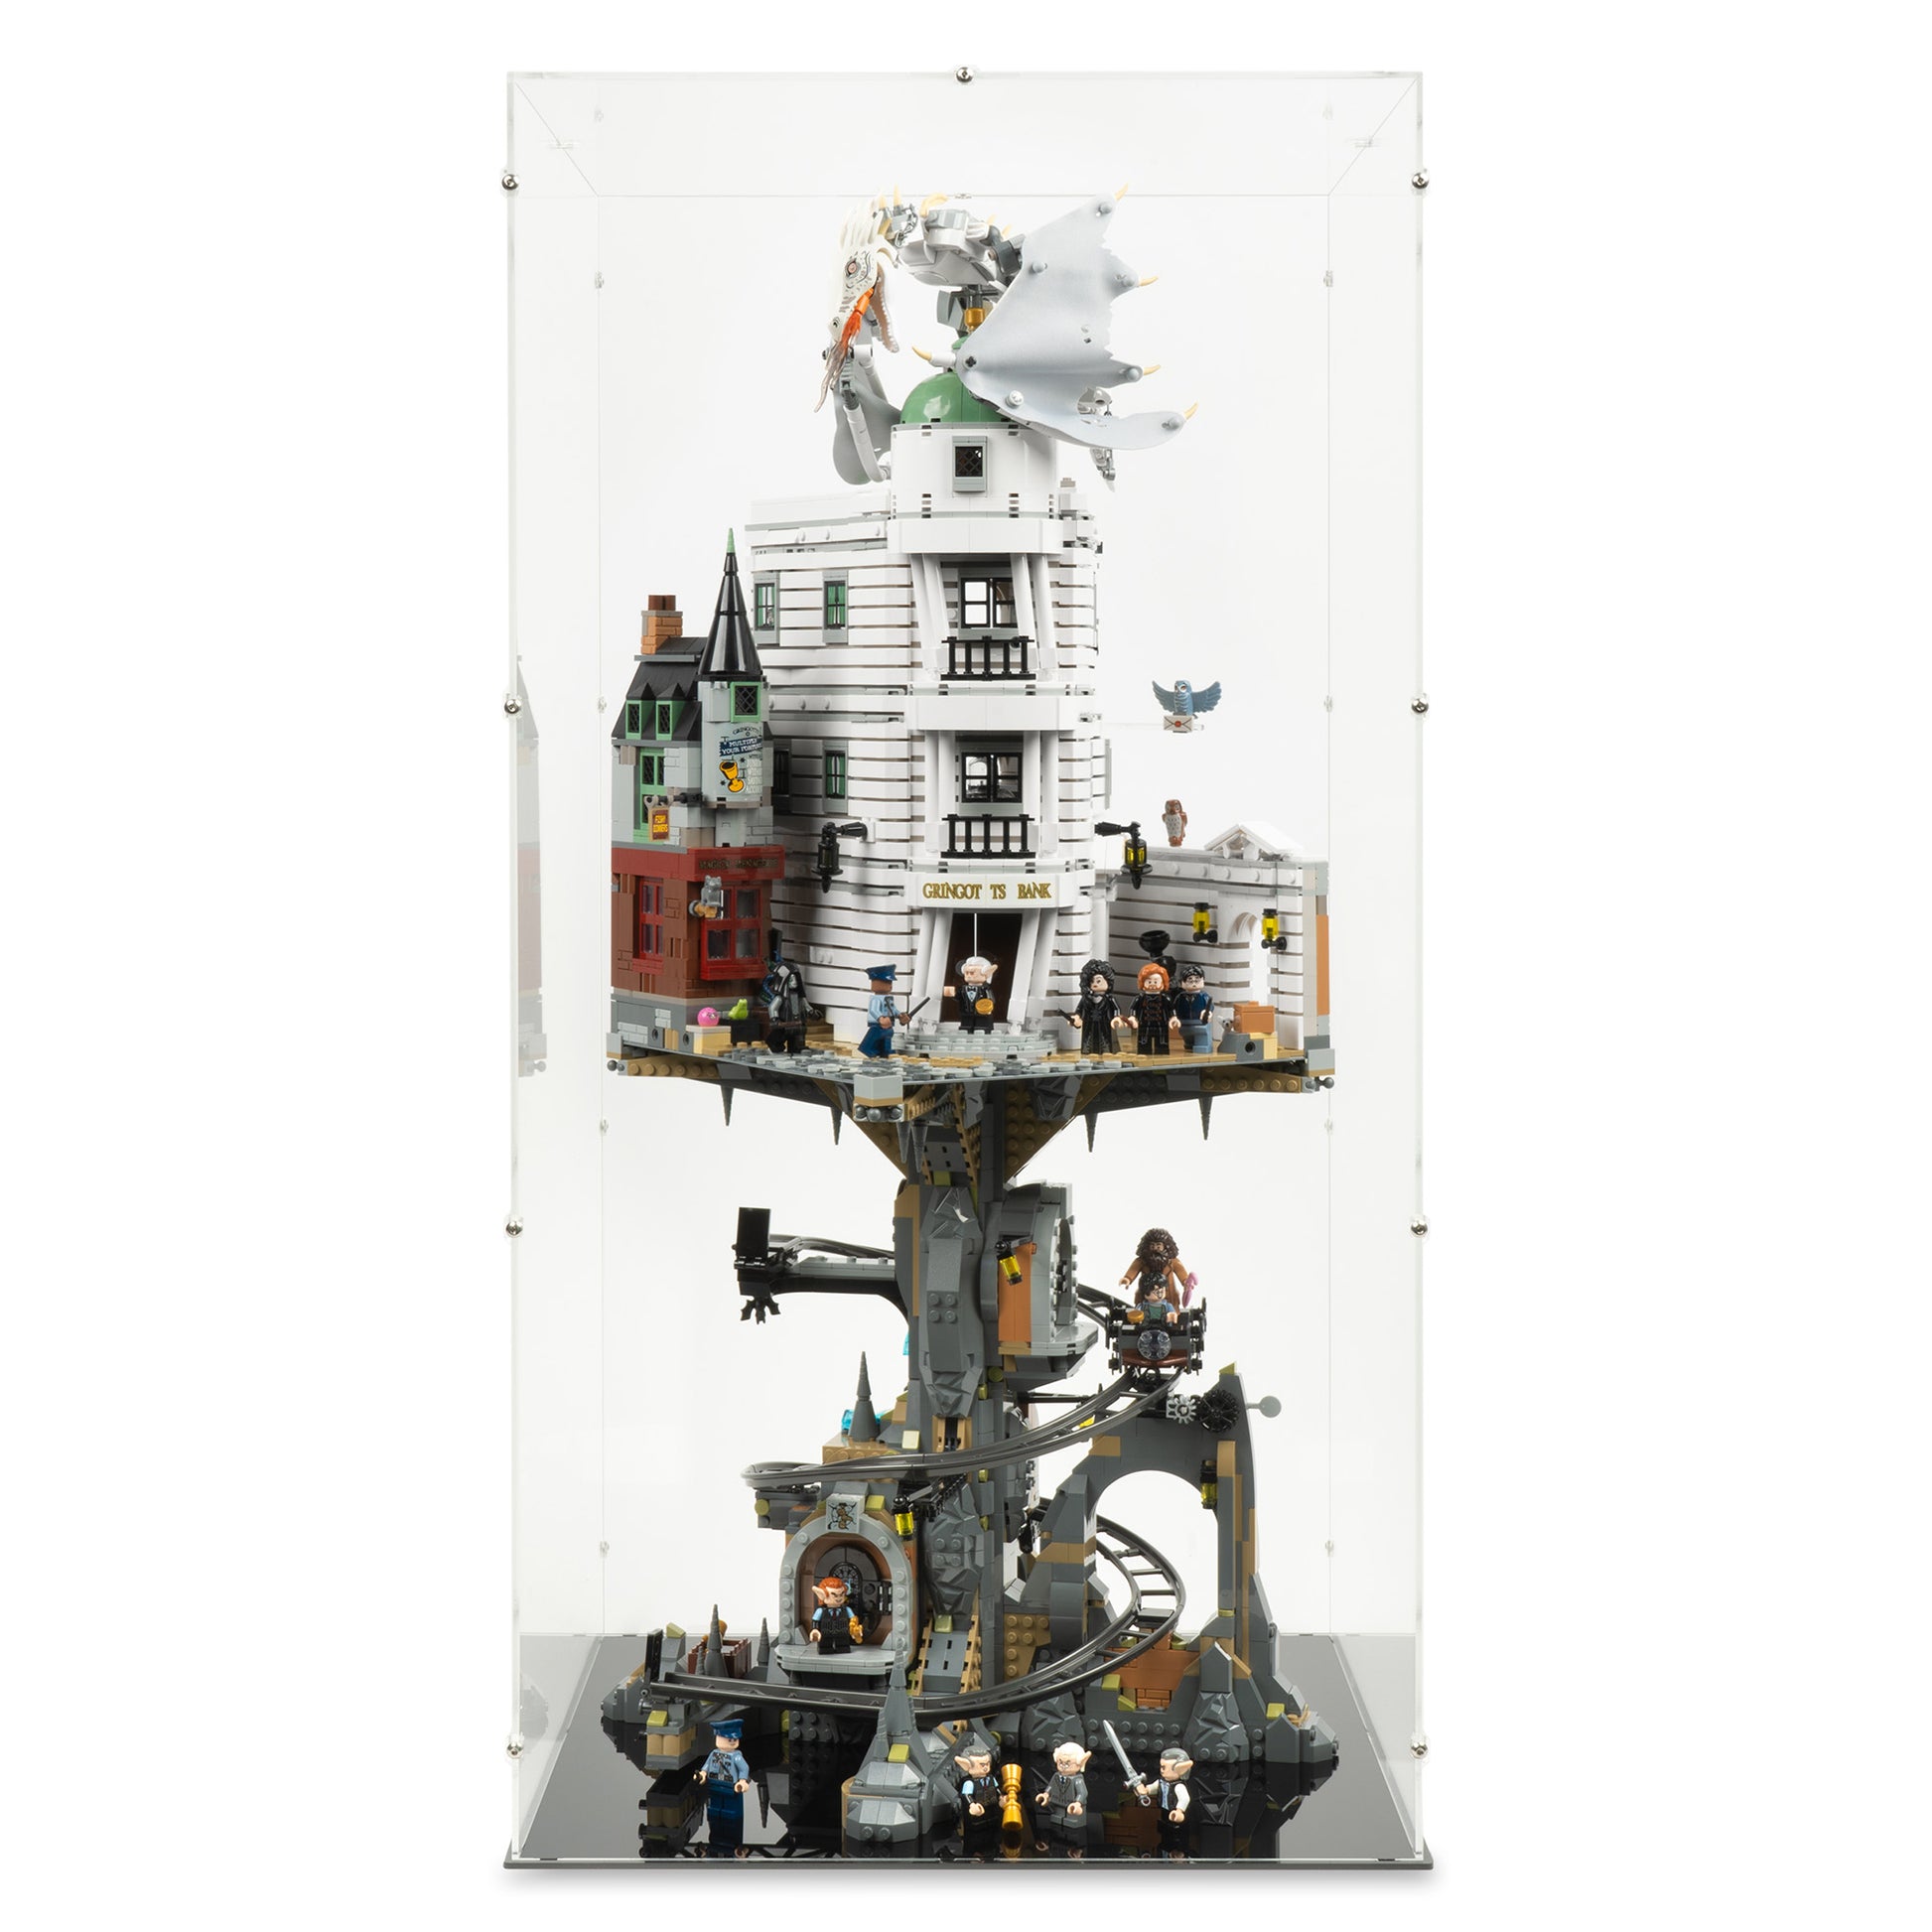 LEGO Harry Potter Gringotts Wizarding Bank – Collectors' Edition